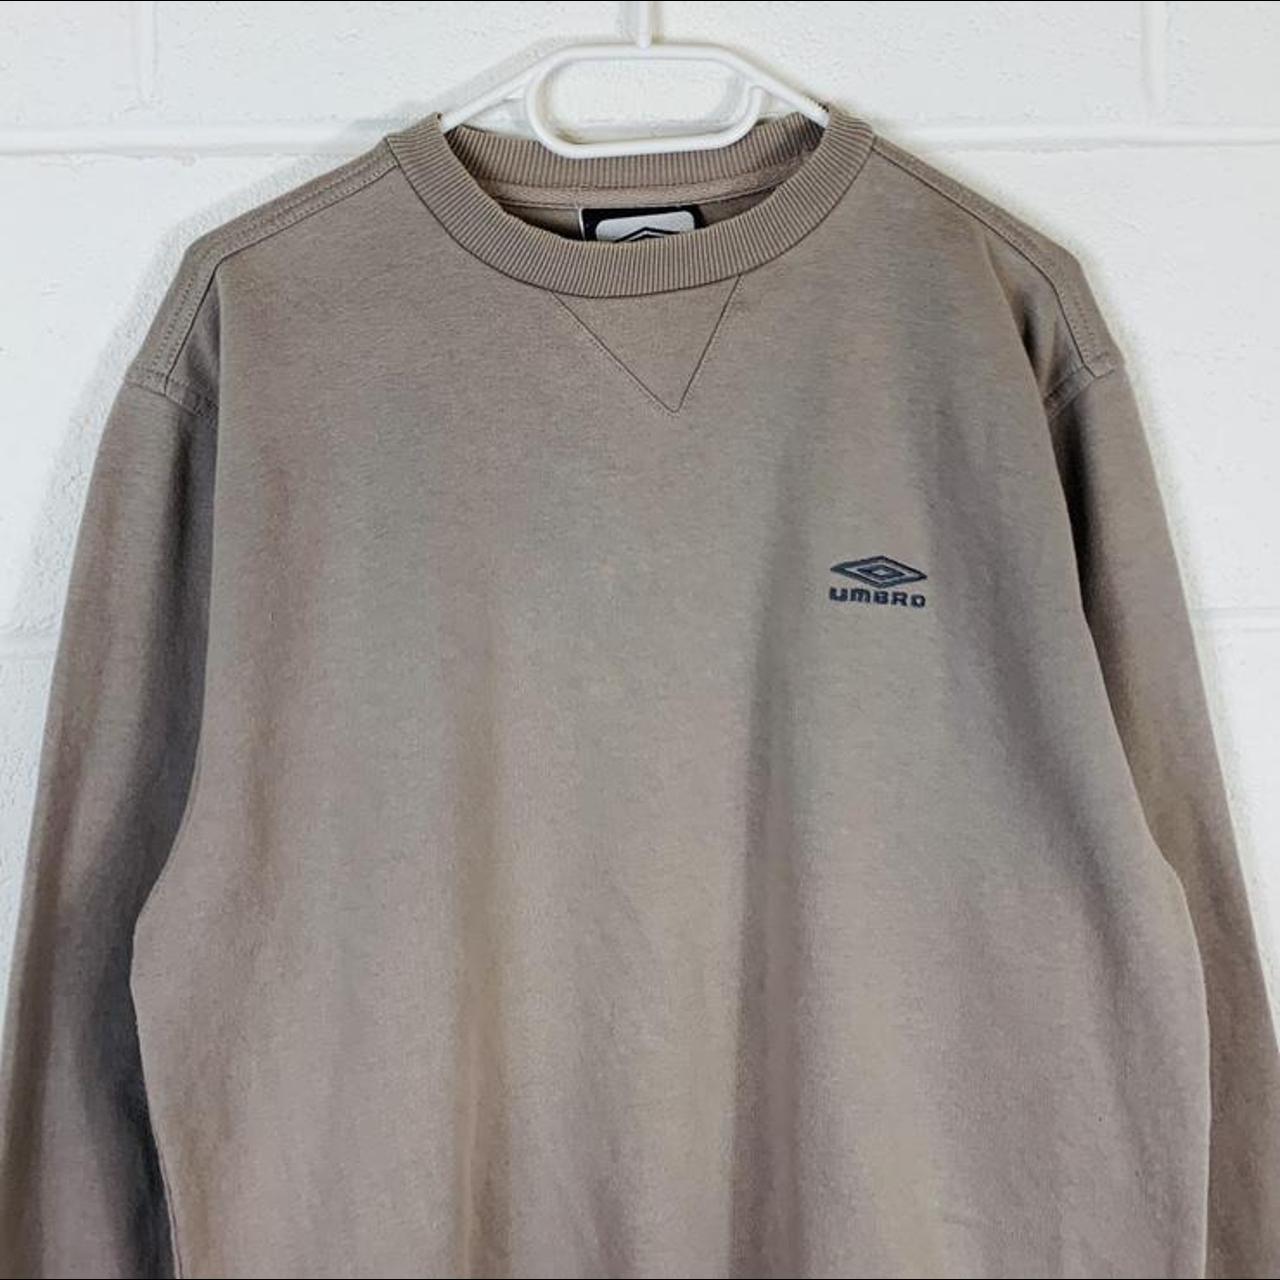 Vintage Umbro Sweatshirt in Grey. Embroidered... - Depop